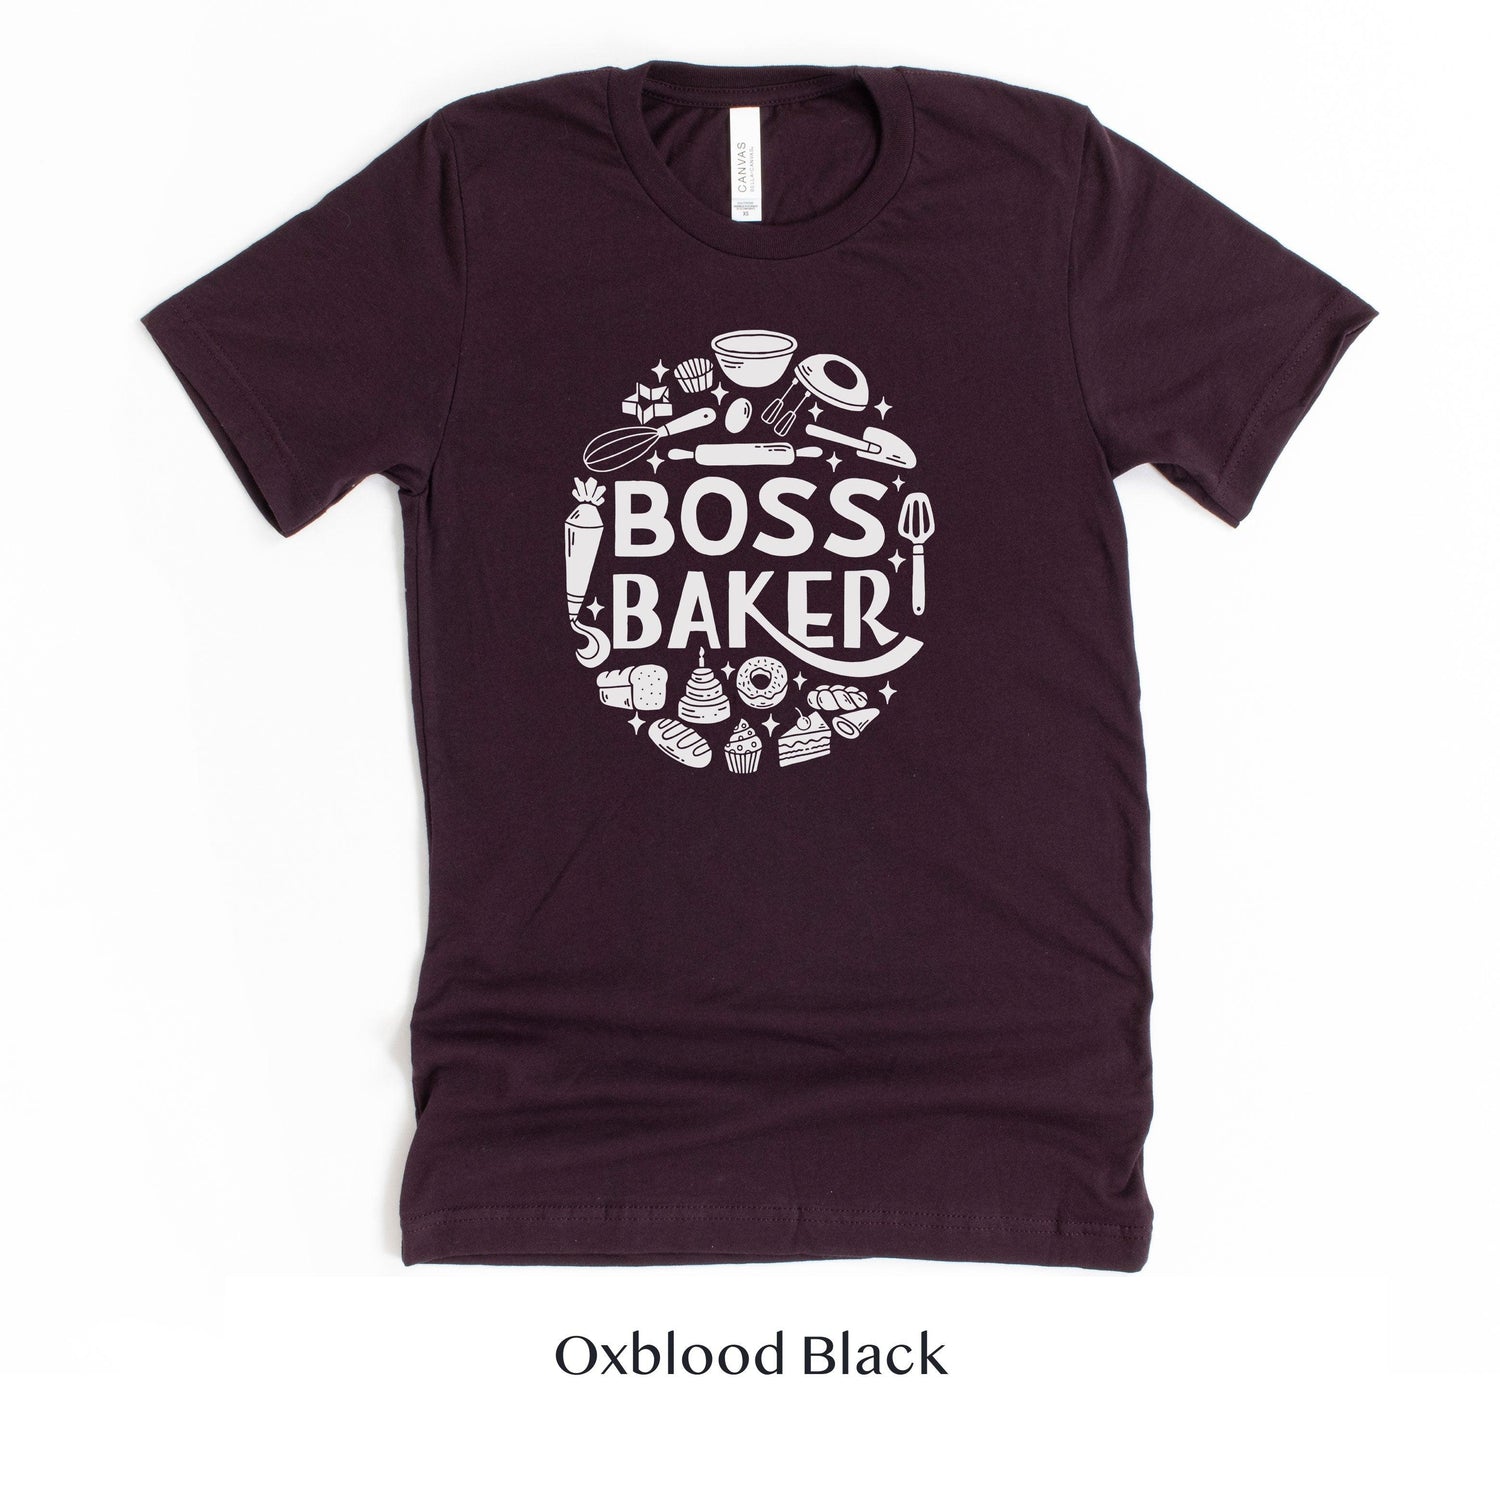 Boss Baker Wedding Cake Short-sleeve Tshirt by Oaklynn Lane - Oxblood Maroon Shirt